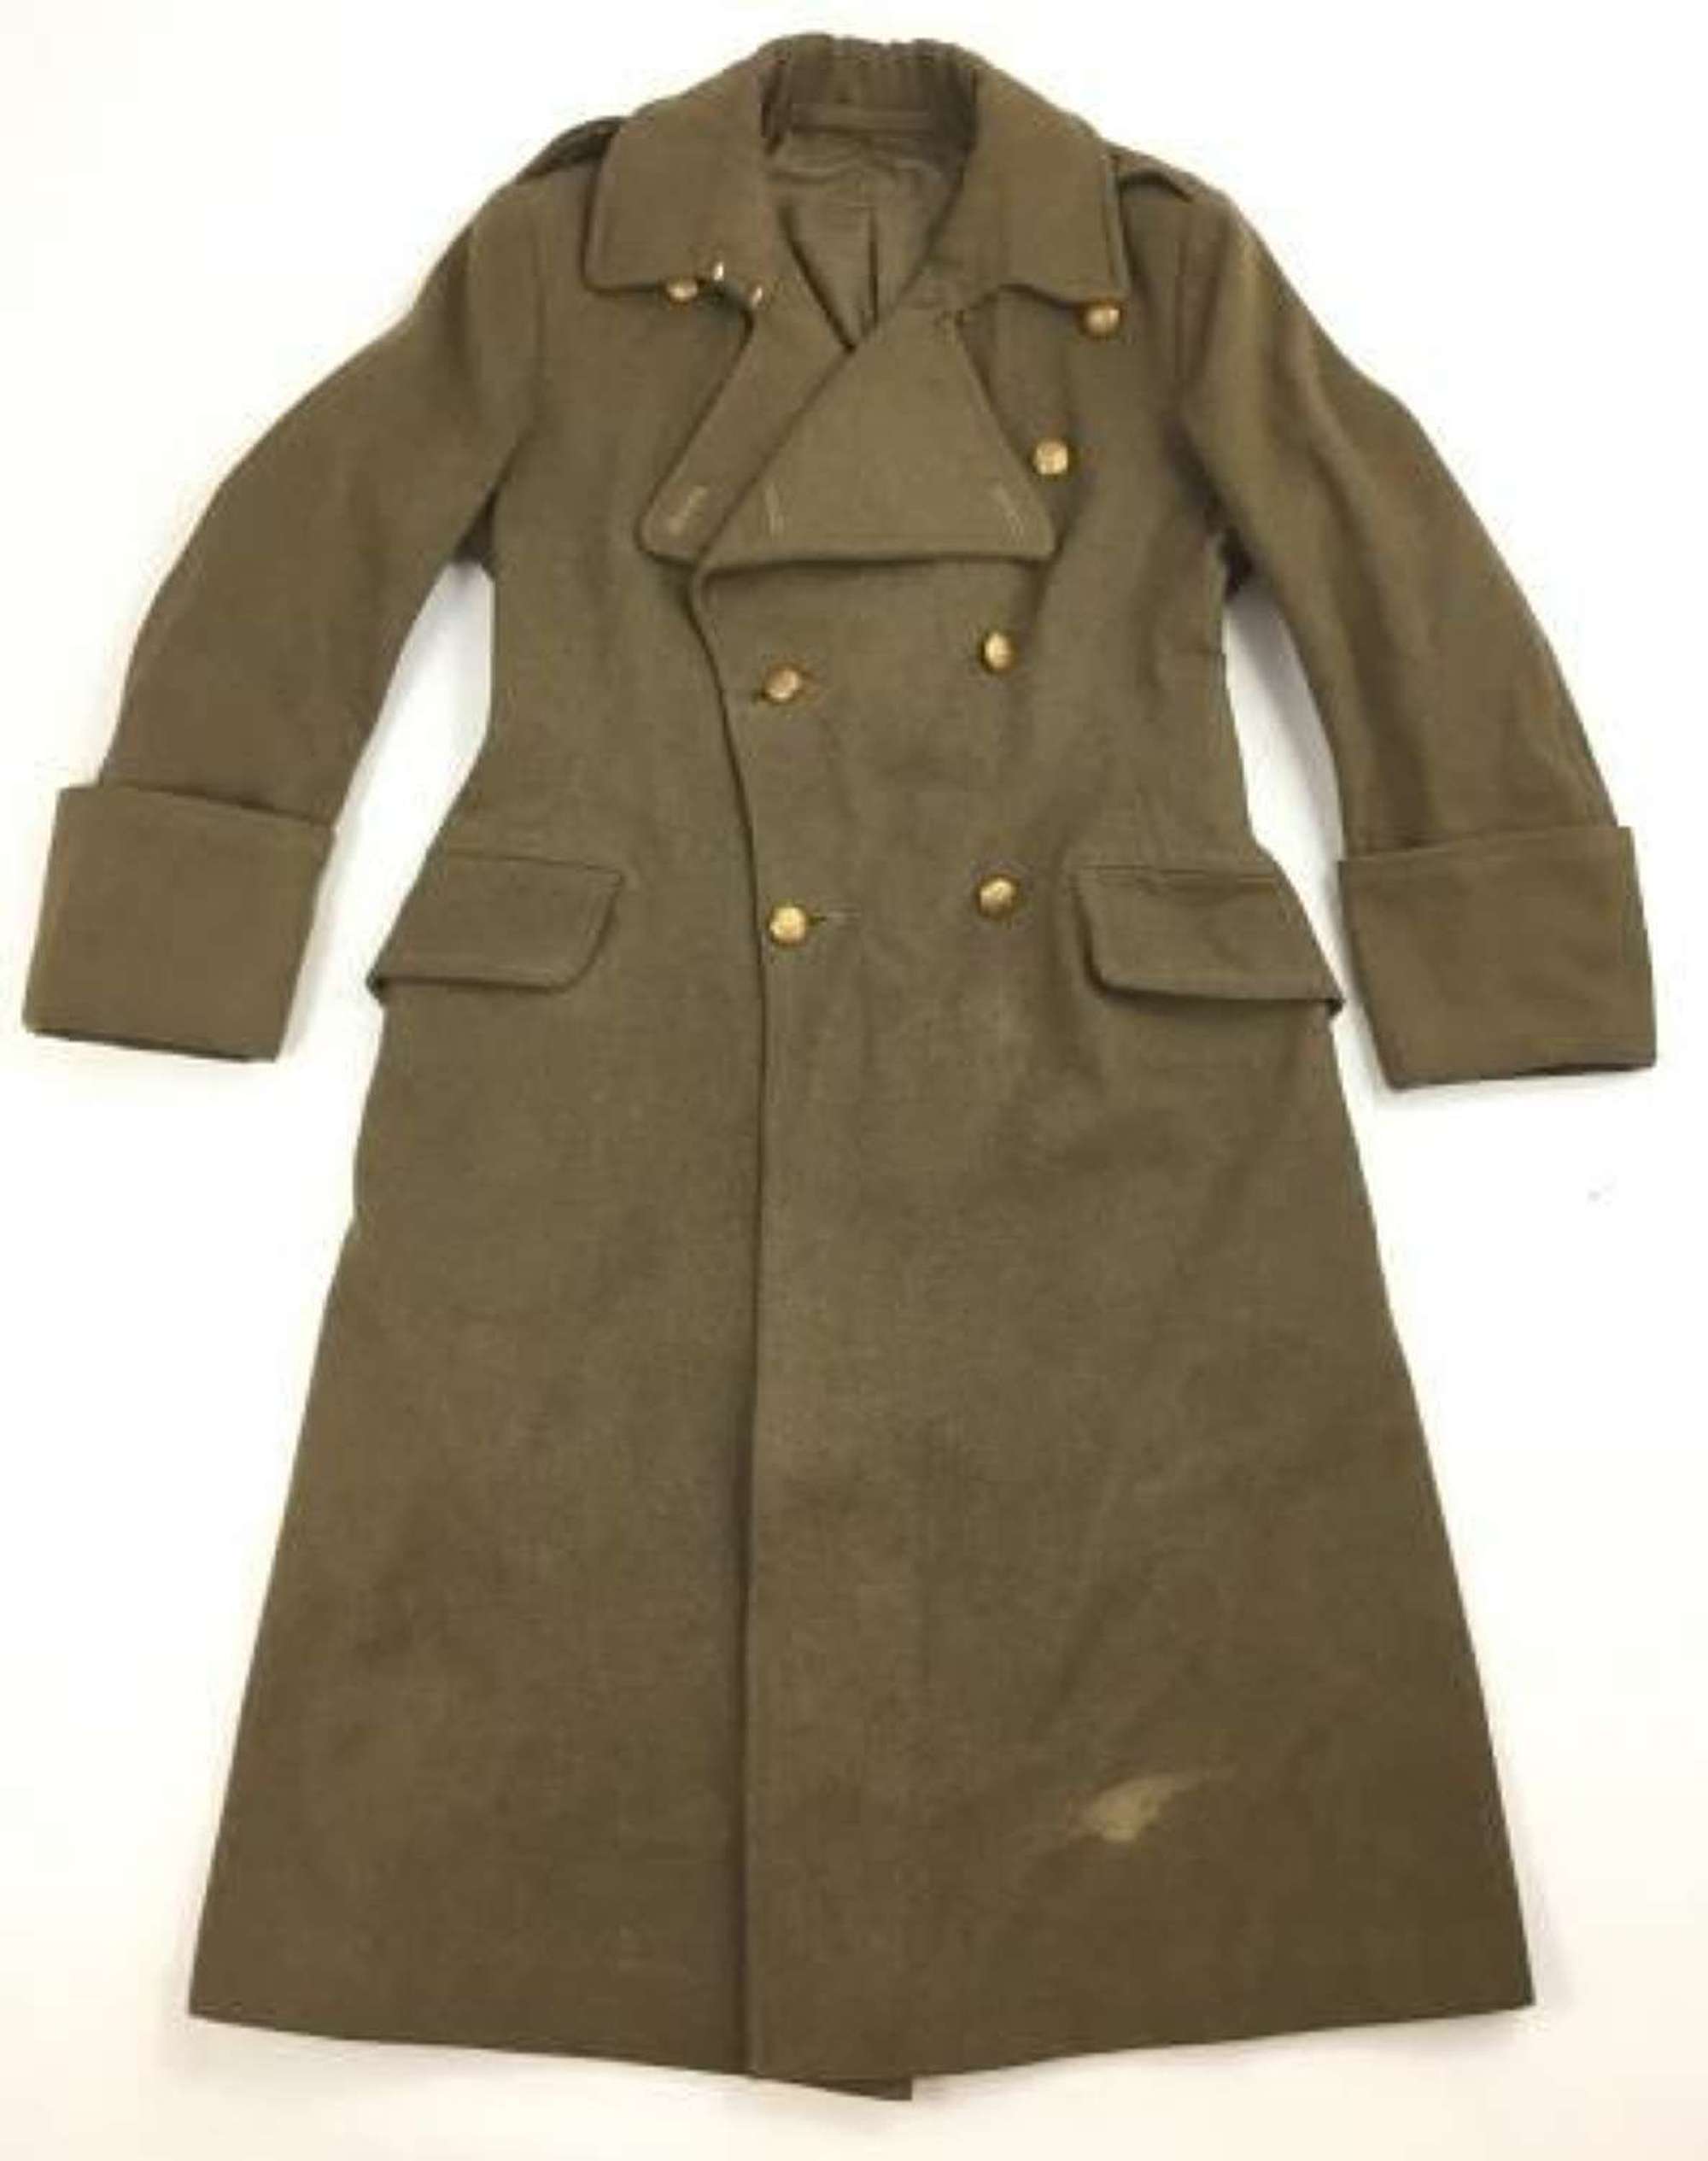 Original WW2 British Army Officers Greatcoat